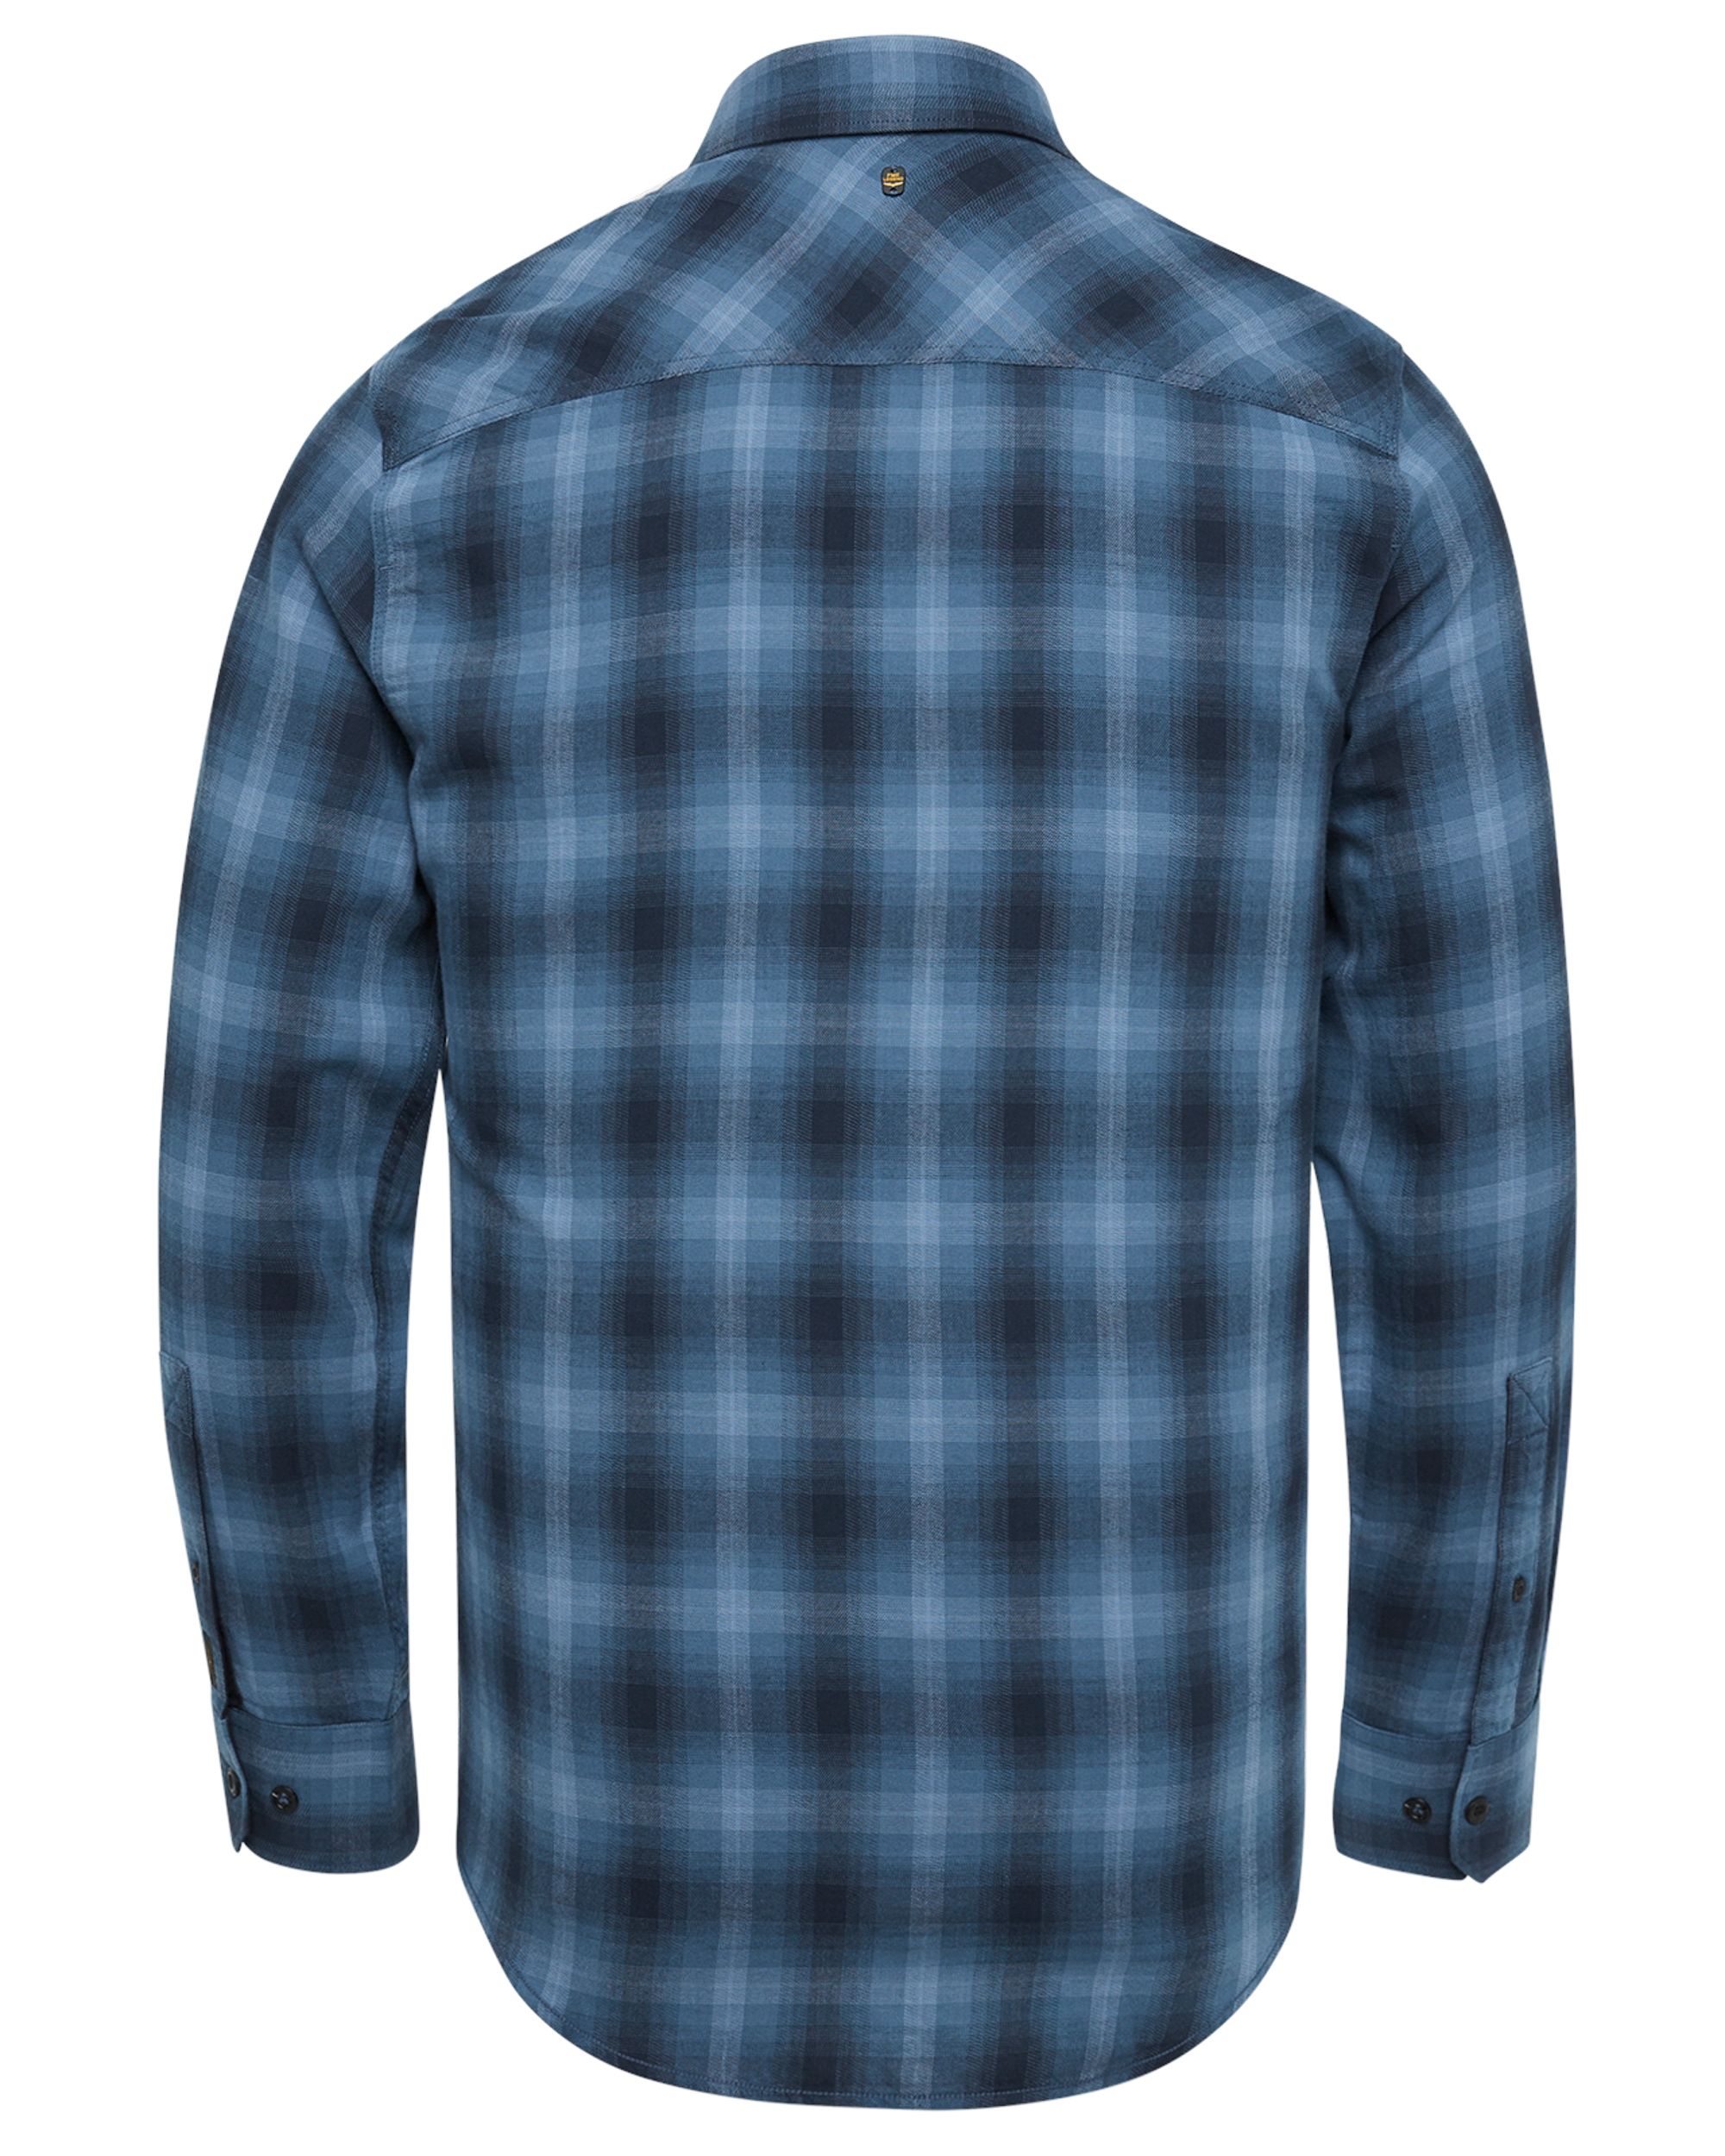 PME Legend Casual Overhemd LM Blauw 082669-001-L